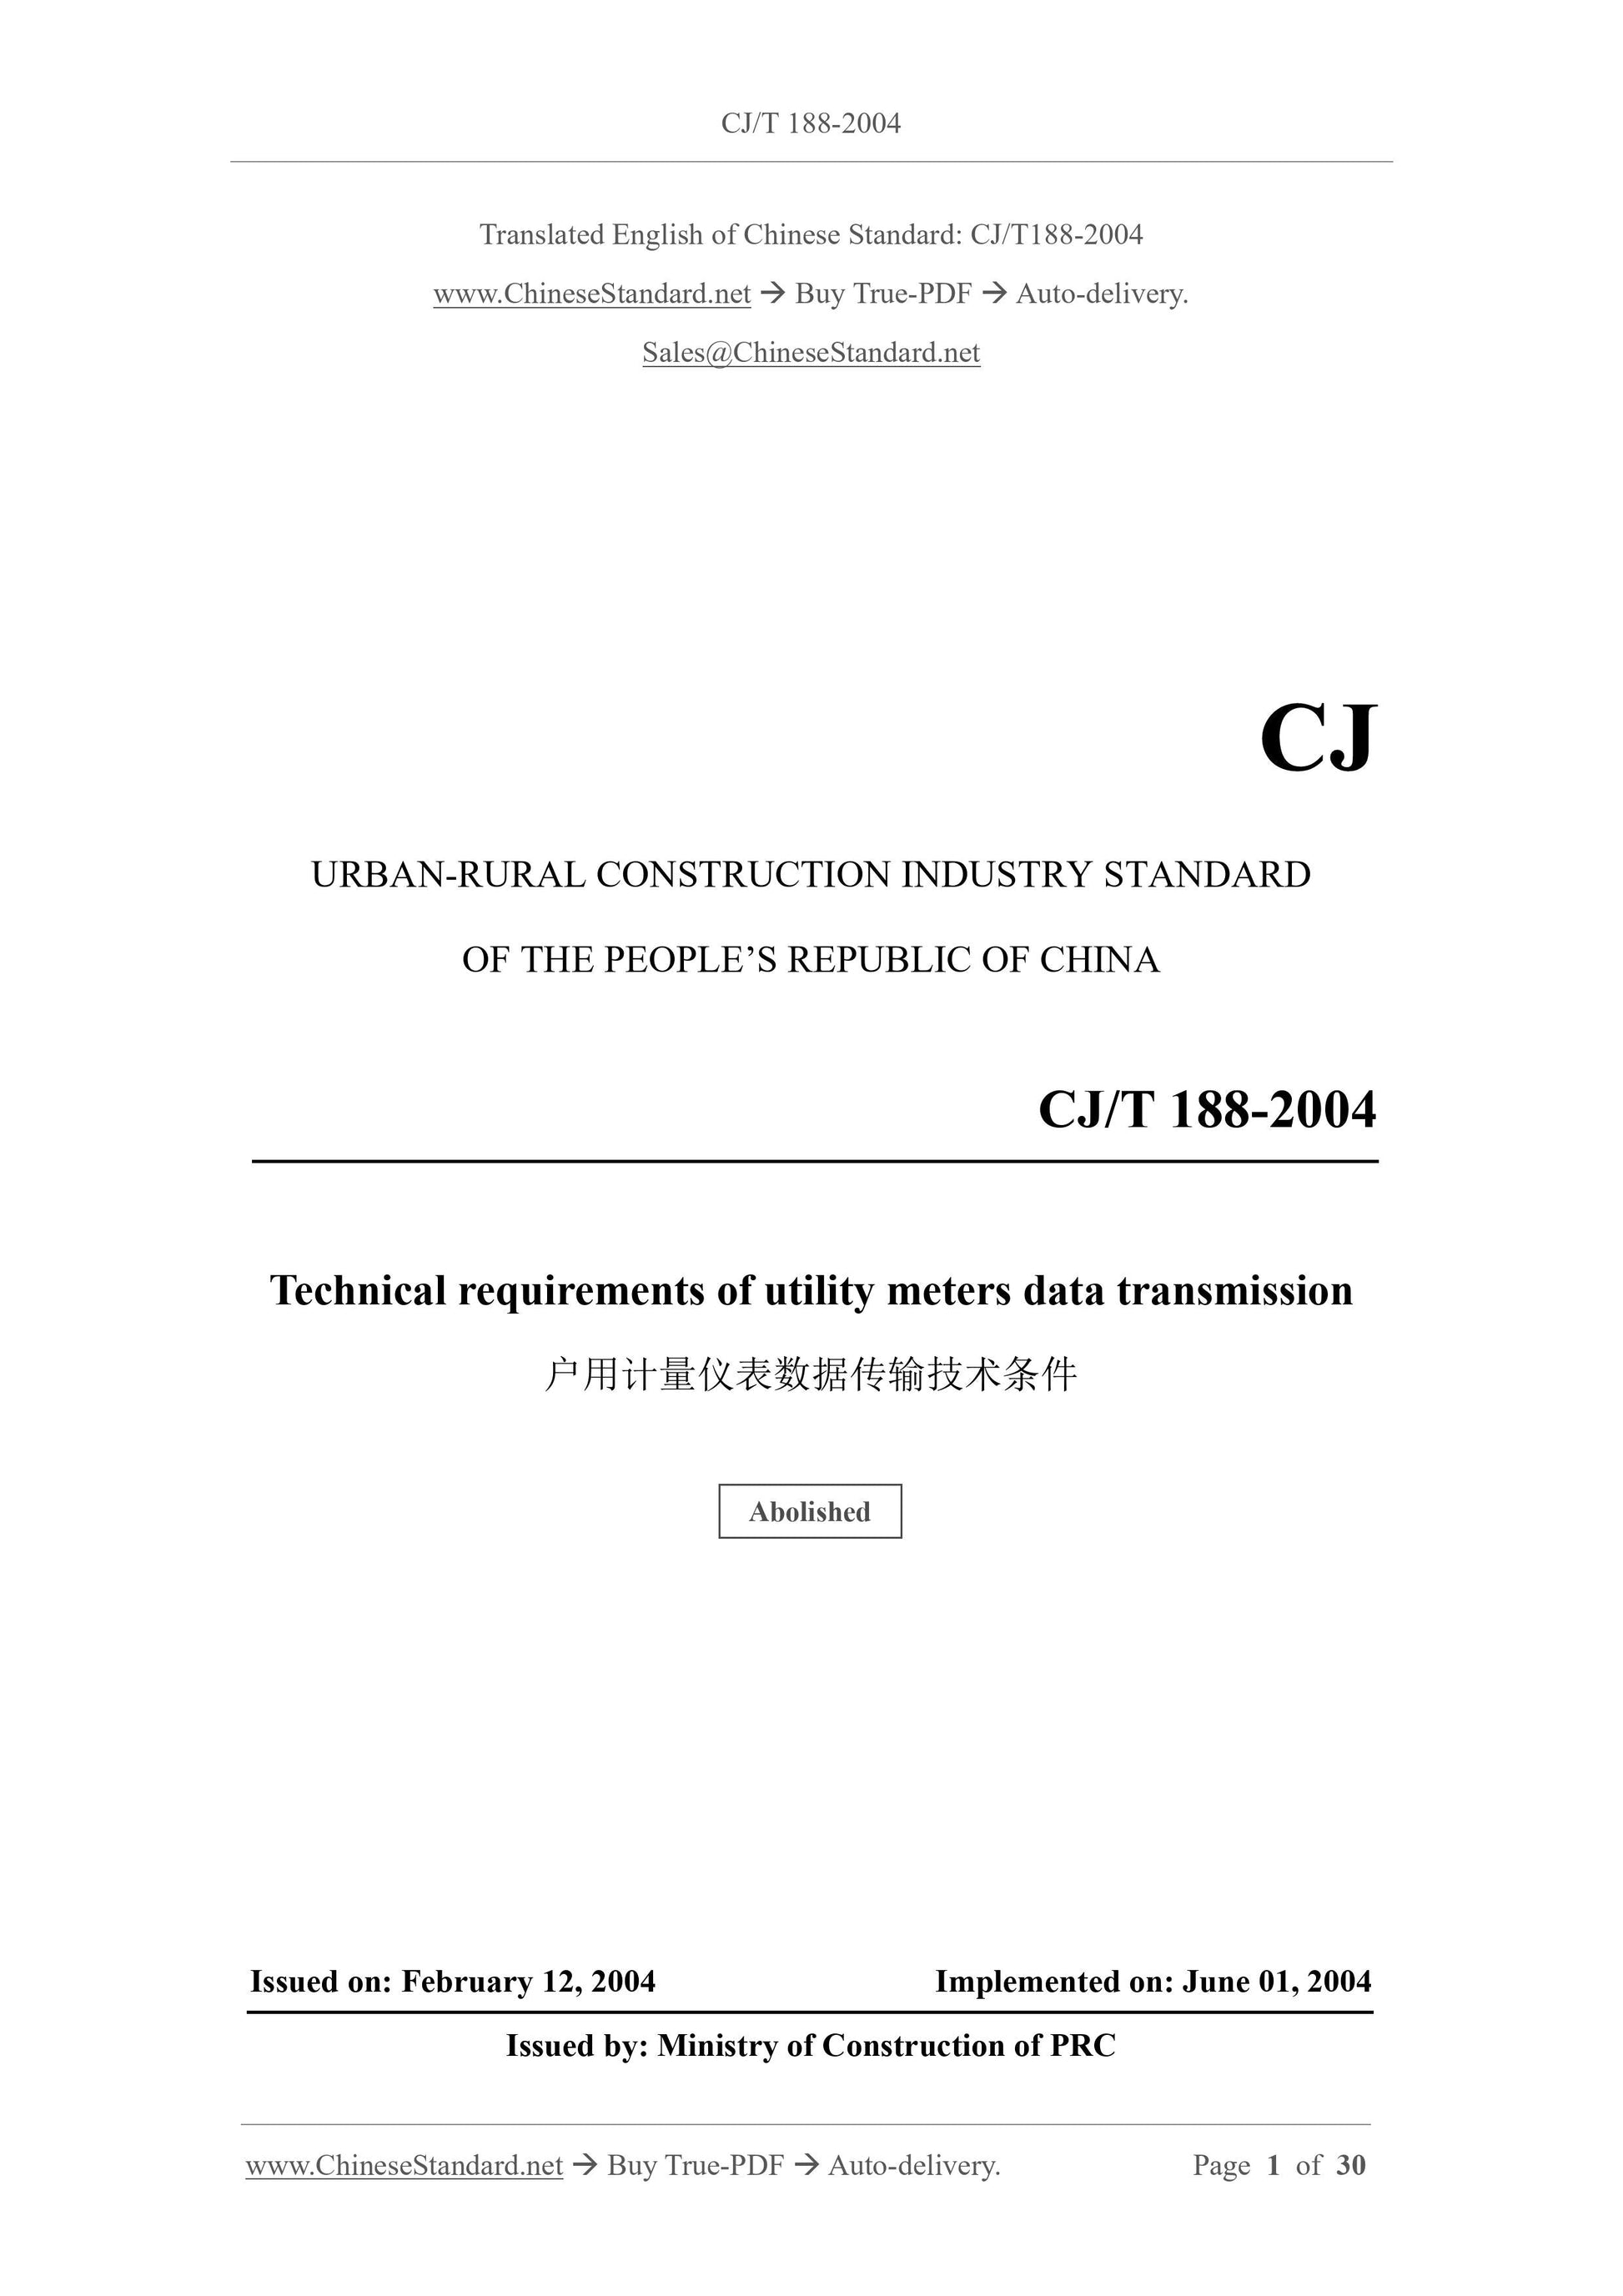 CJ/T 188-2004 Page 1